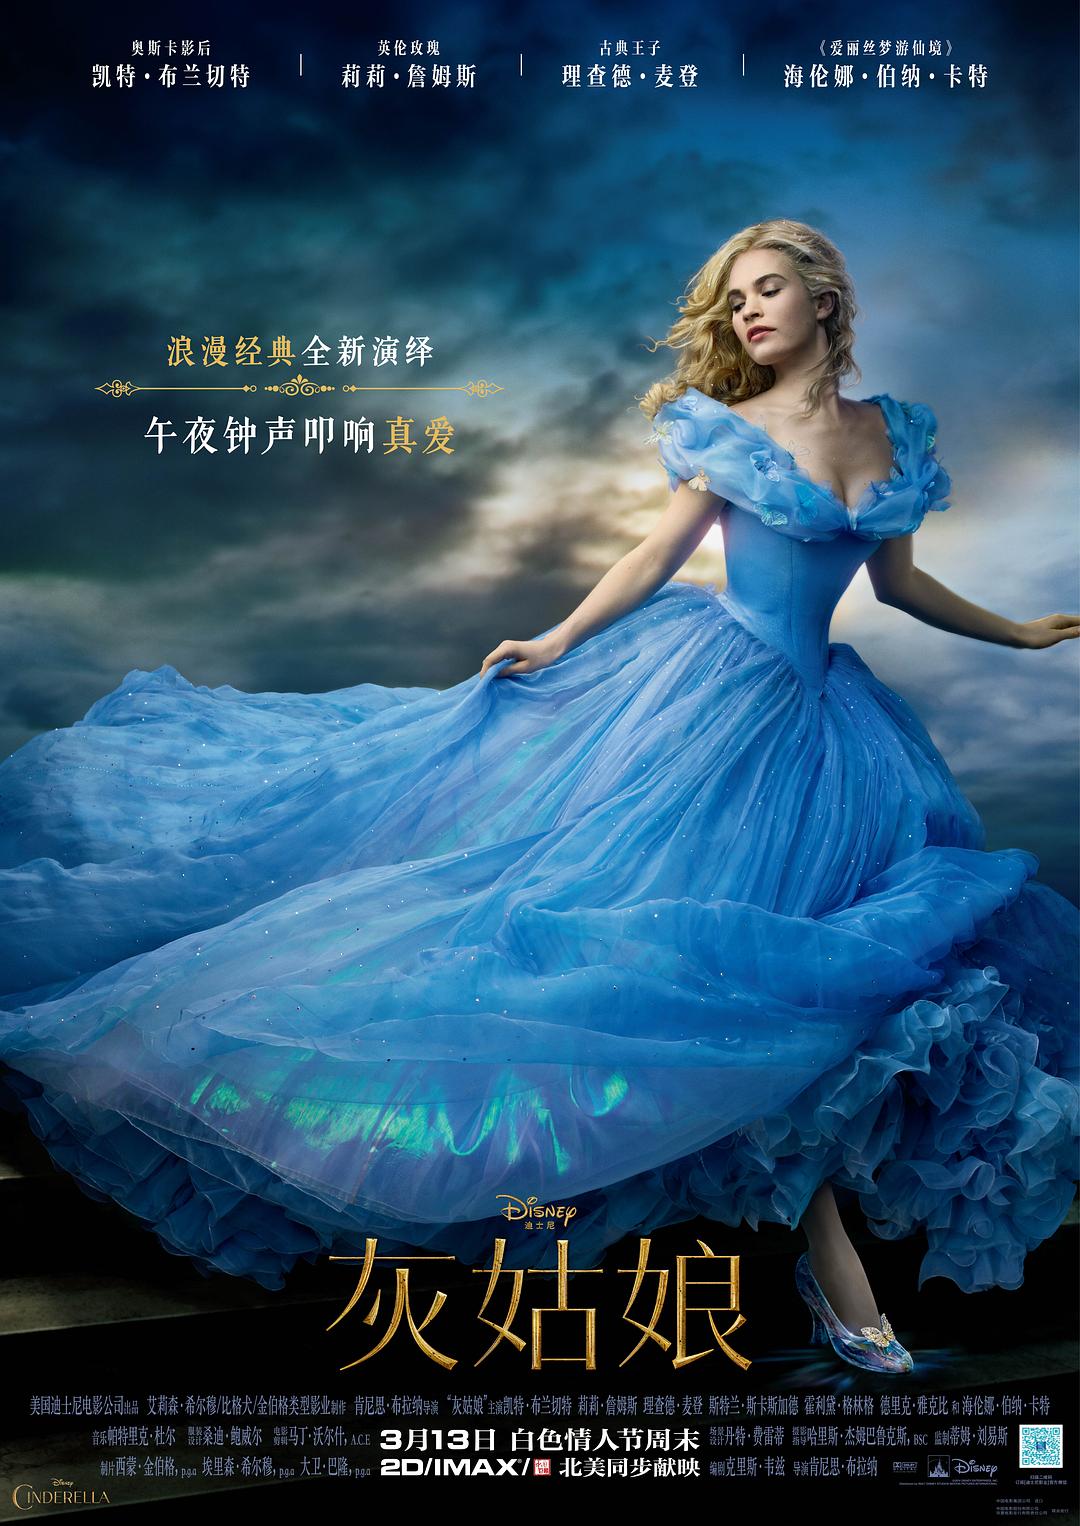 灰姑娘/仙履奇缘 Cinderella.2015.1080p.BluRay.x264.DTS-HD.MA.7.1-SWTYBLZ 9.48GB-1.png